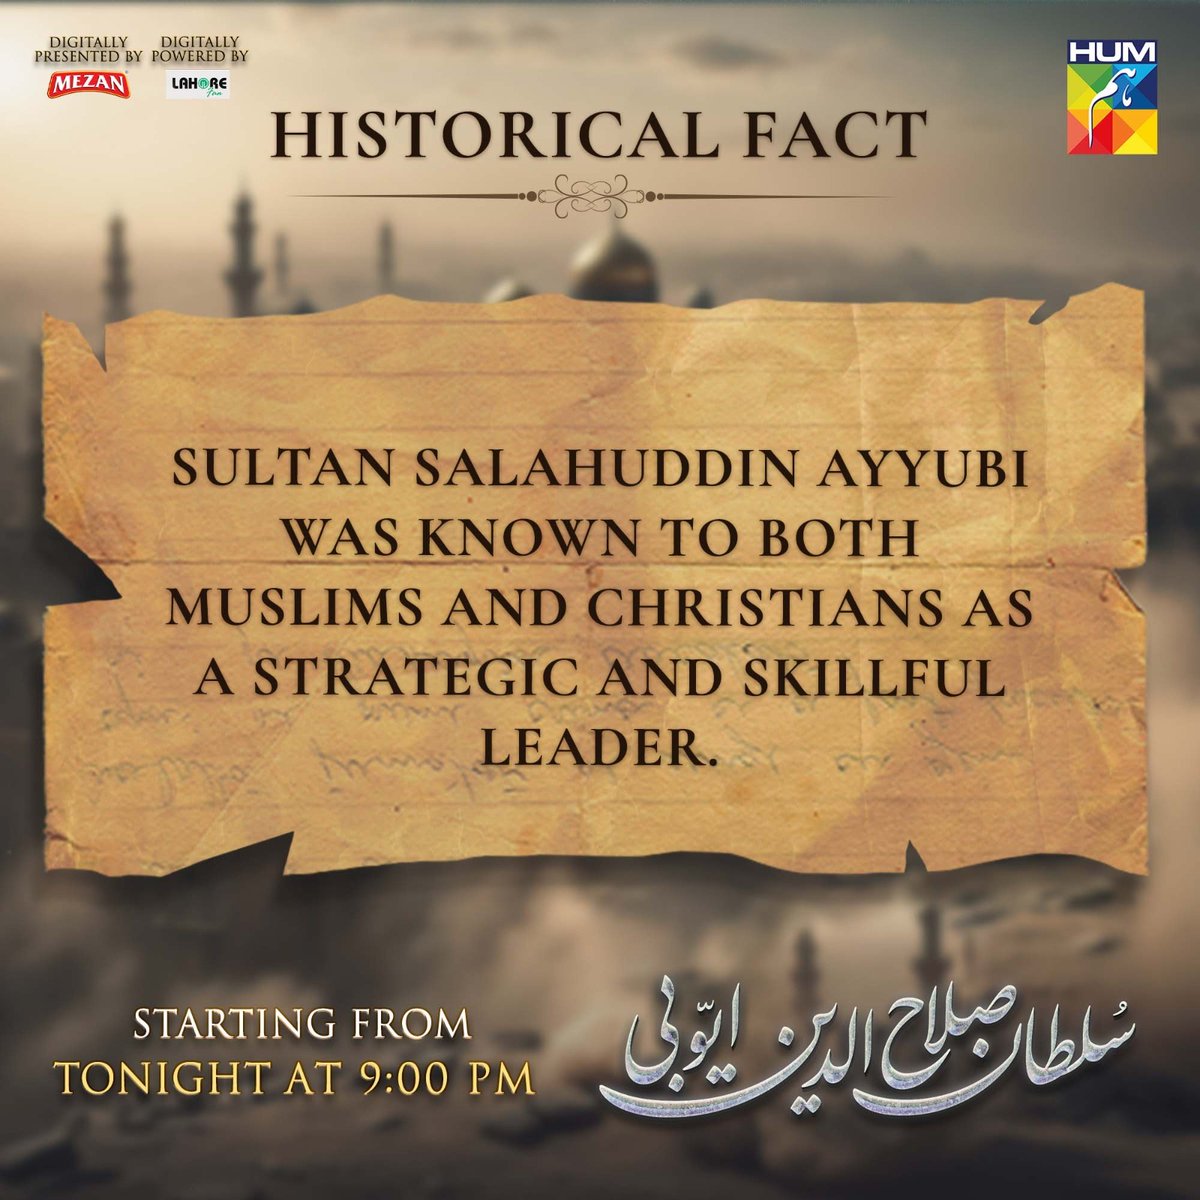 Discover the extraordinary legacy of Salahuddin Ayyubi, the Muslim leader who changed history.Watch #SultanSalahuddinAyyubi Every Monday To Thursday At 9:00 PM, Starting Tonight Only On Hum TV! #SultanSalahuddinAyyubi #HUMTV #KudüsFatihiSelahaddinEyyubi #UğurGüneş